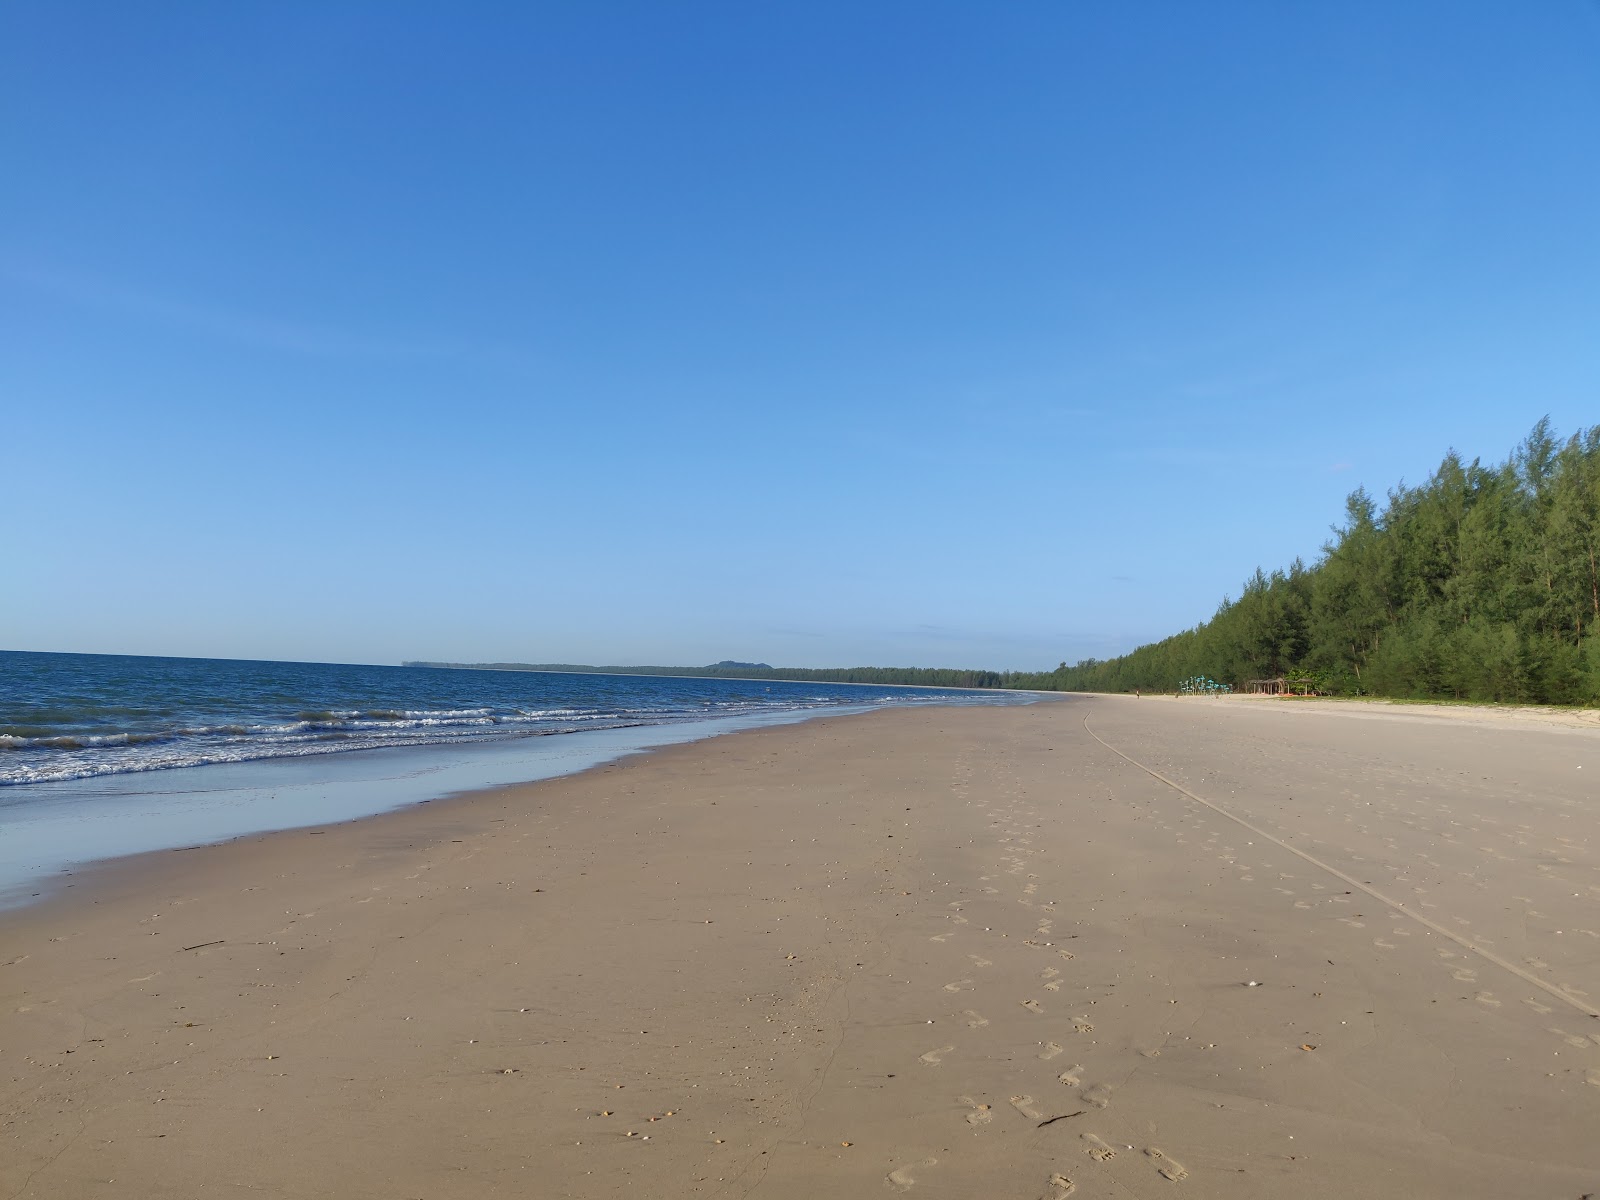 Foto di Hapla Beach ubicato in zona naturale